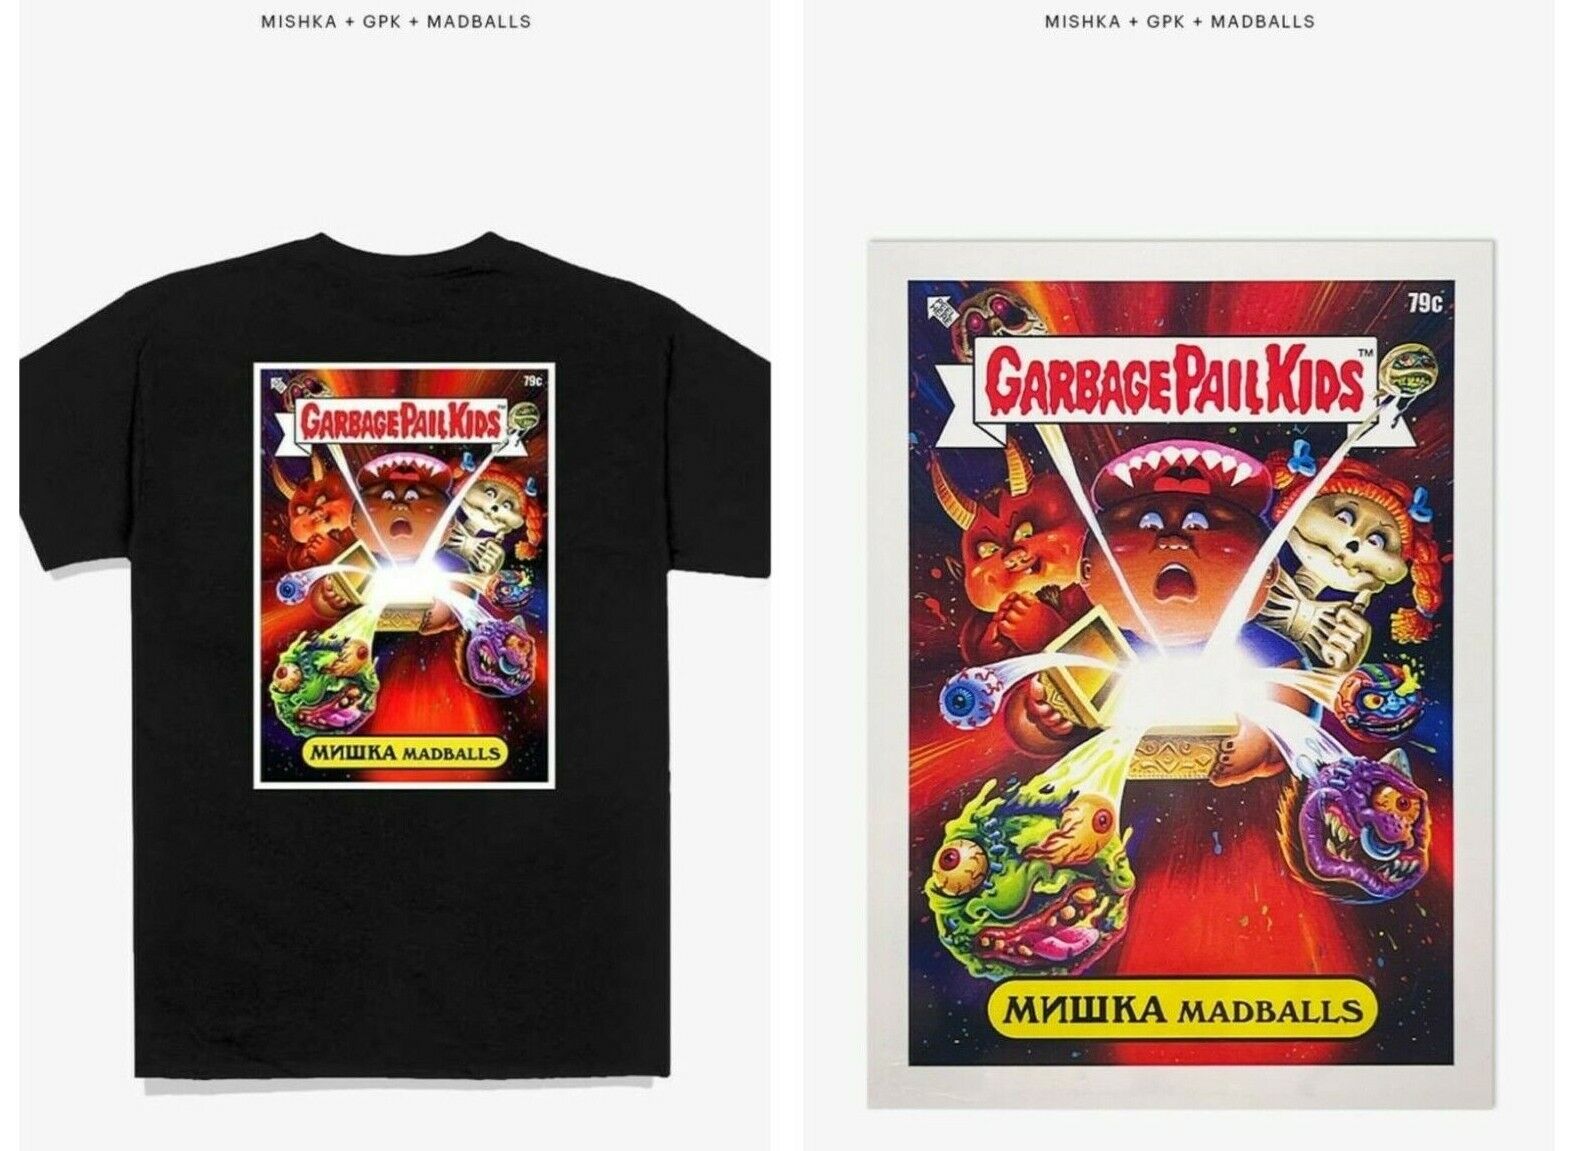 MISHKA/GPK/MADBALLS Exclusive Tee/T Shirt & Card X Large/XL Garbage Pail Kids 